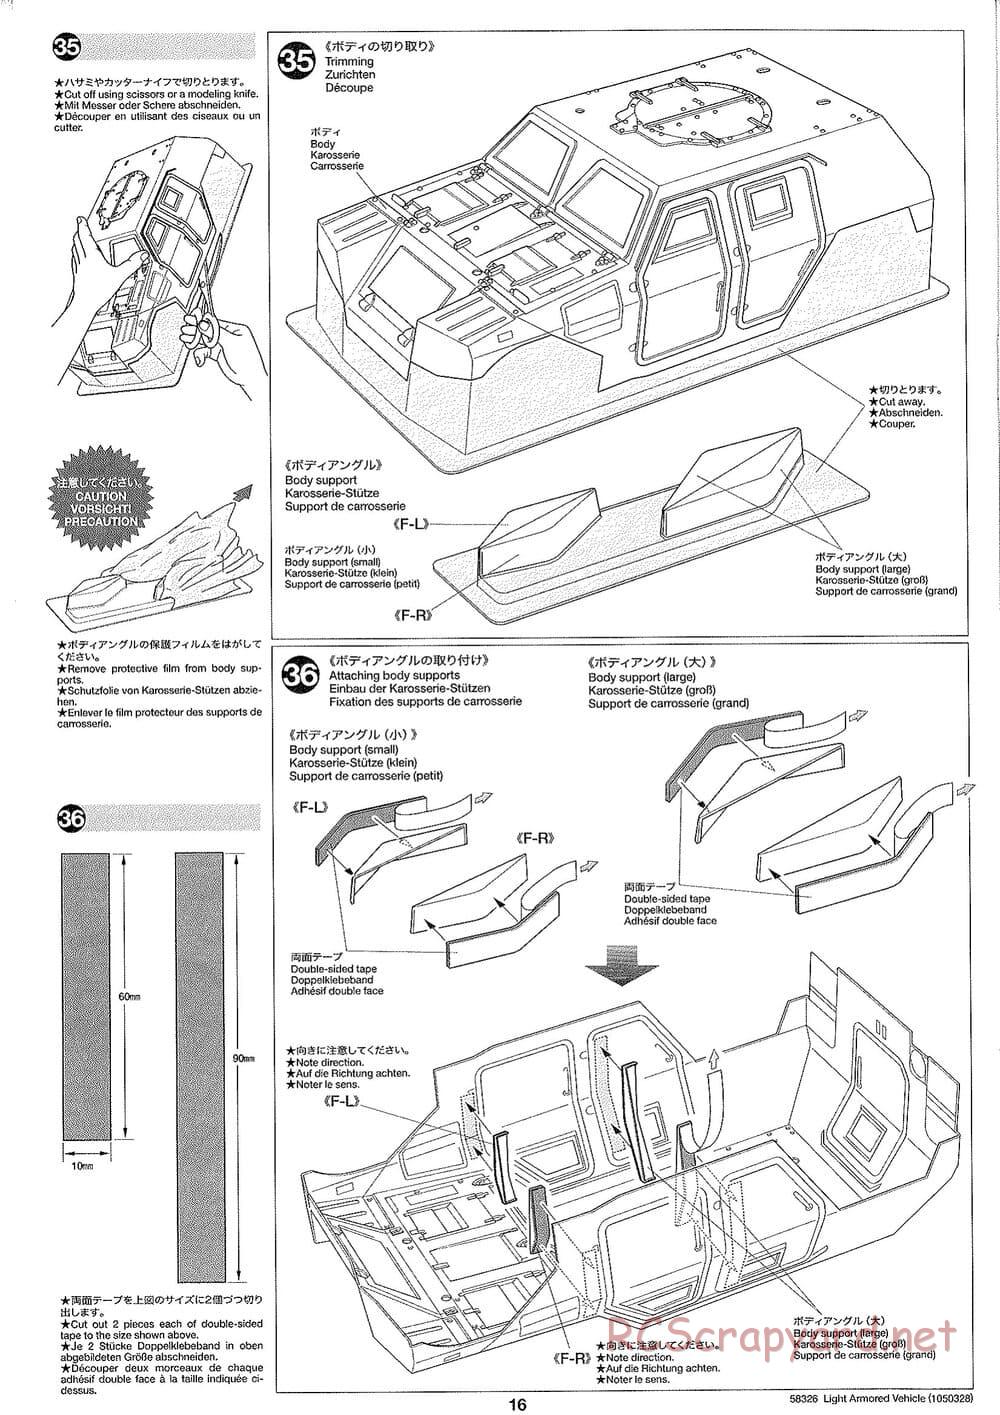 Tamiya - JGSDF Light Armored Vehicle - TA-01 Chassis - Manual - Page 16